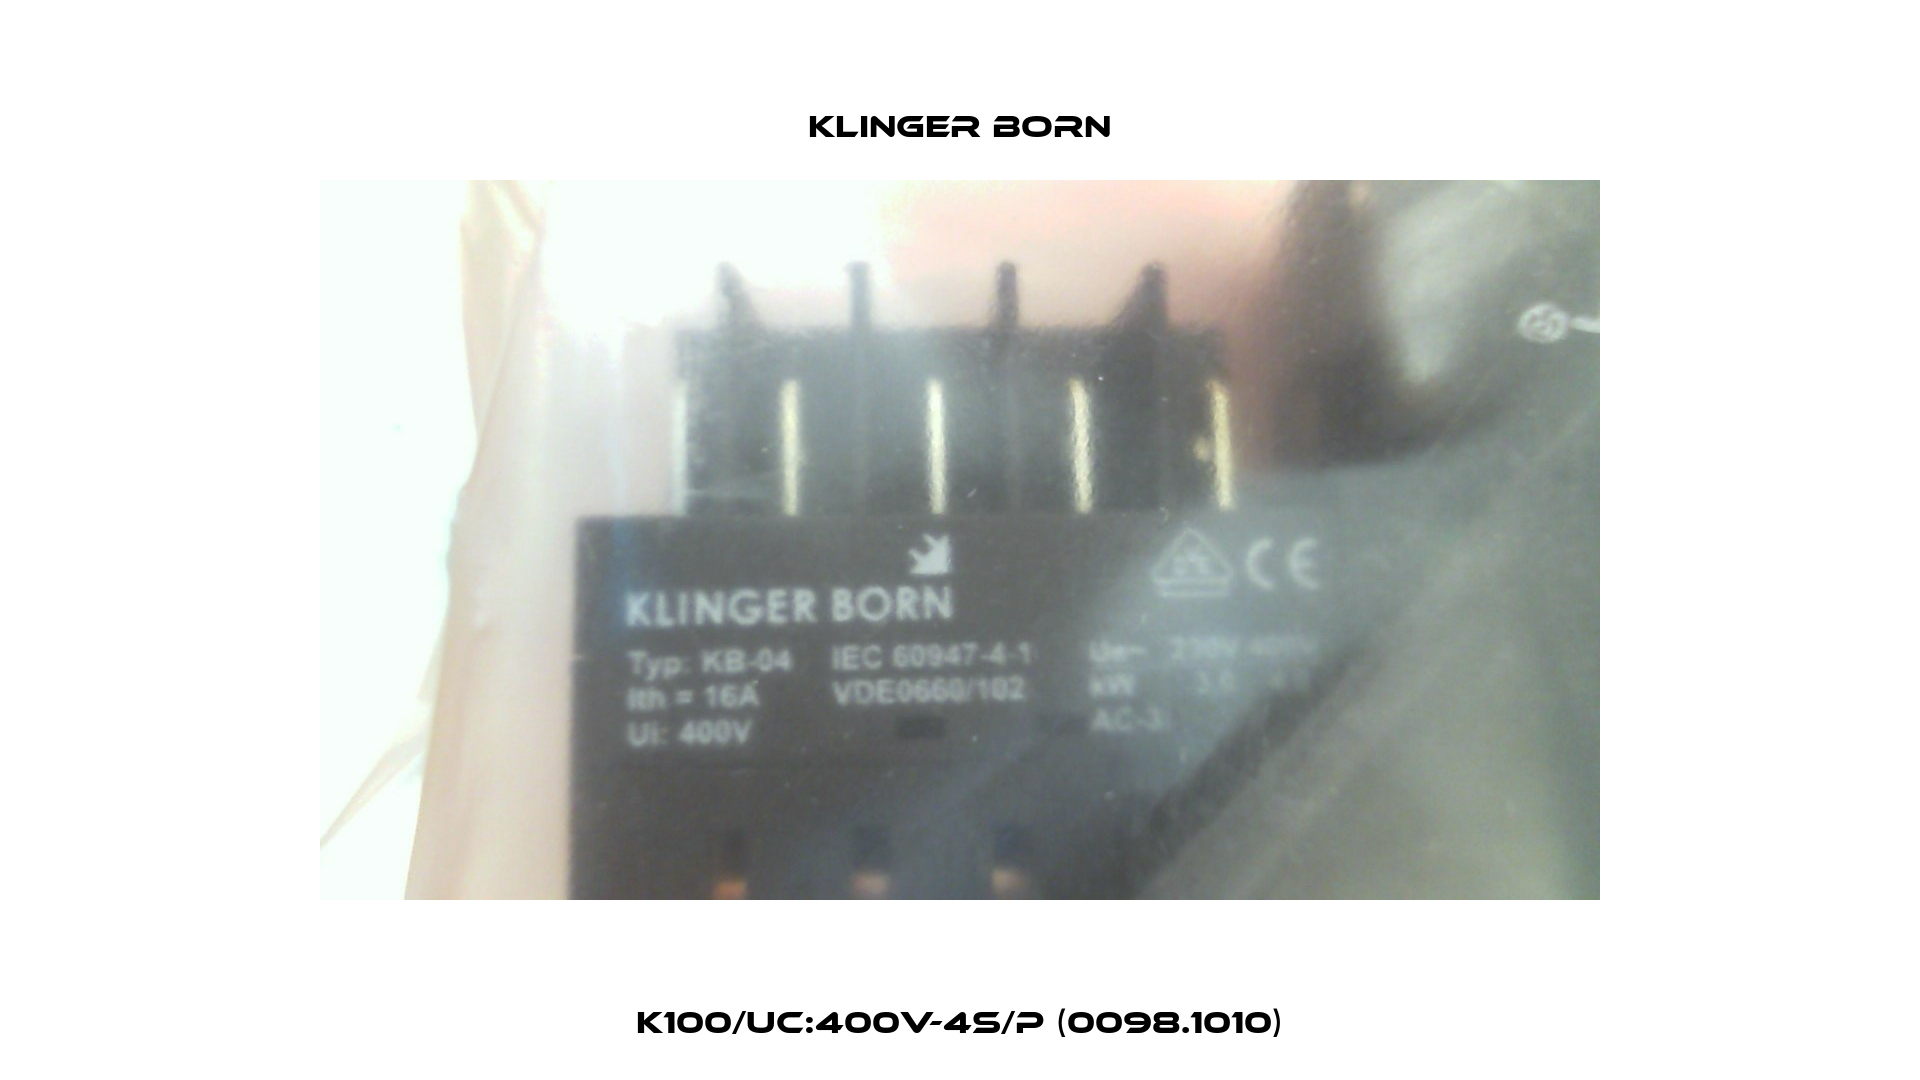 K100/Uc:400V-4s/P (0098.1010) Klinger Born